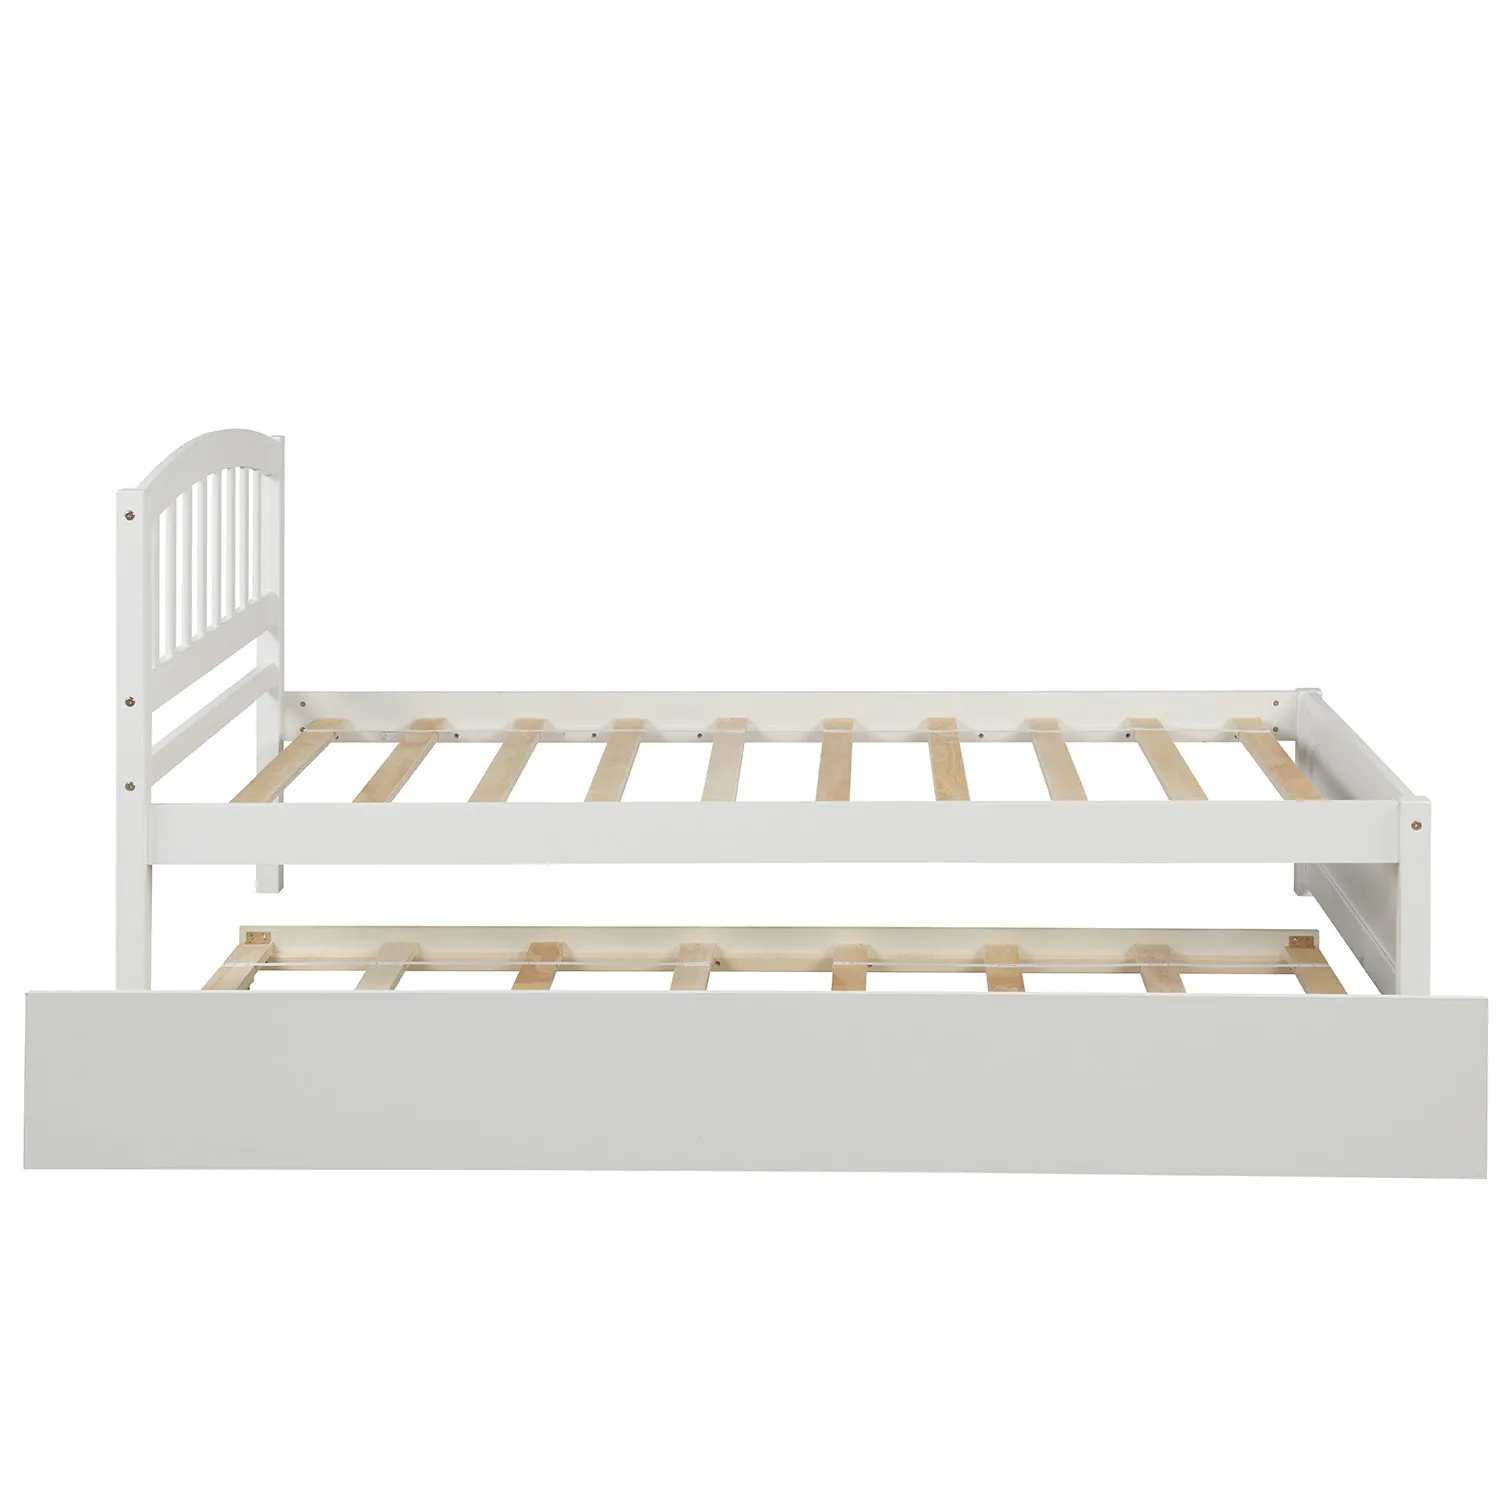 Merax Platform Bed Wood Bed Frame with Trundle